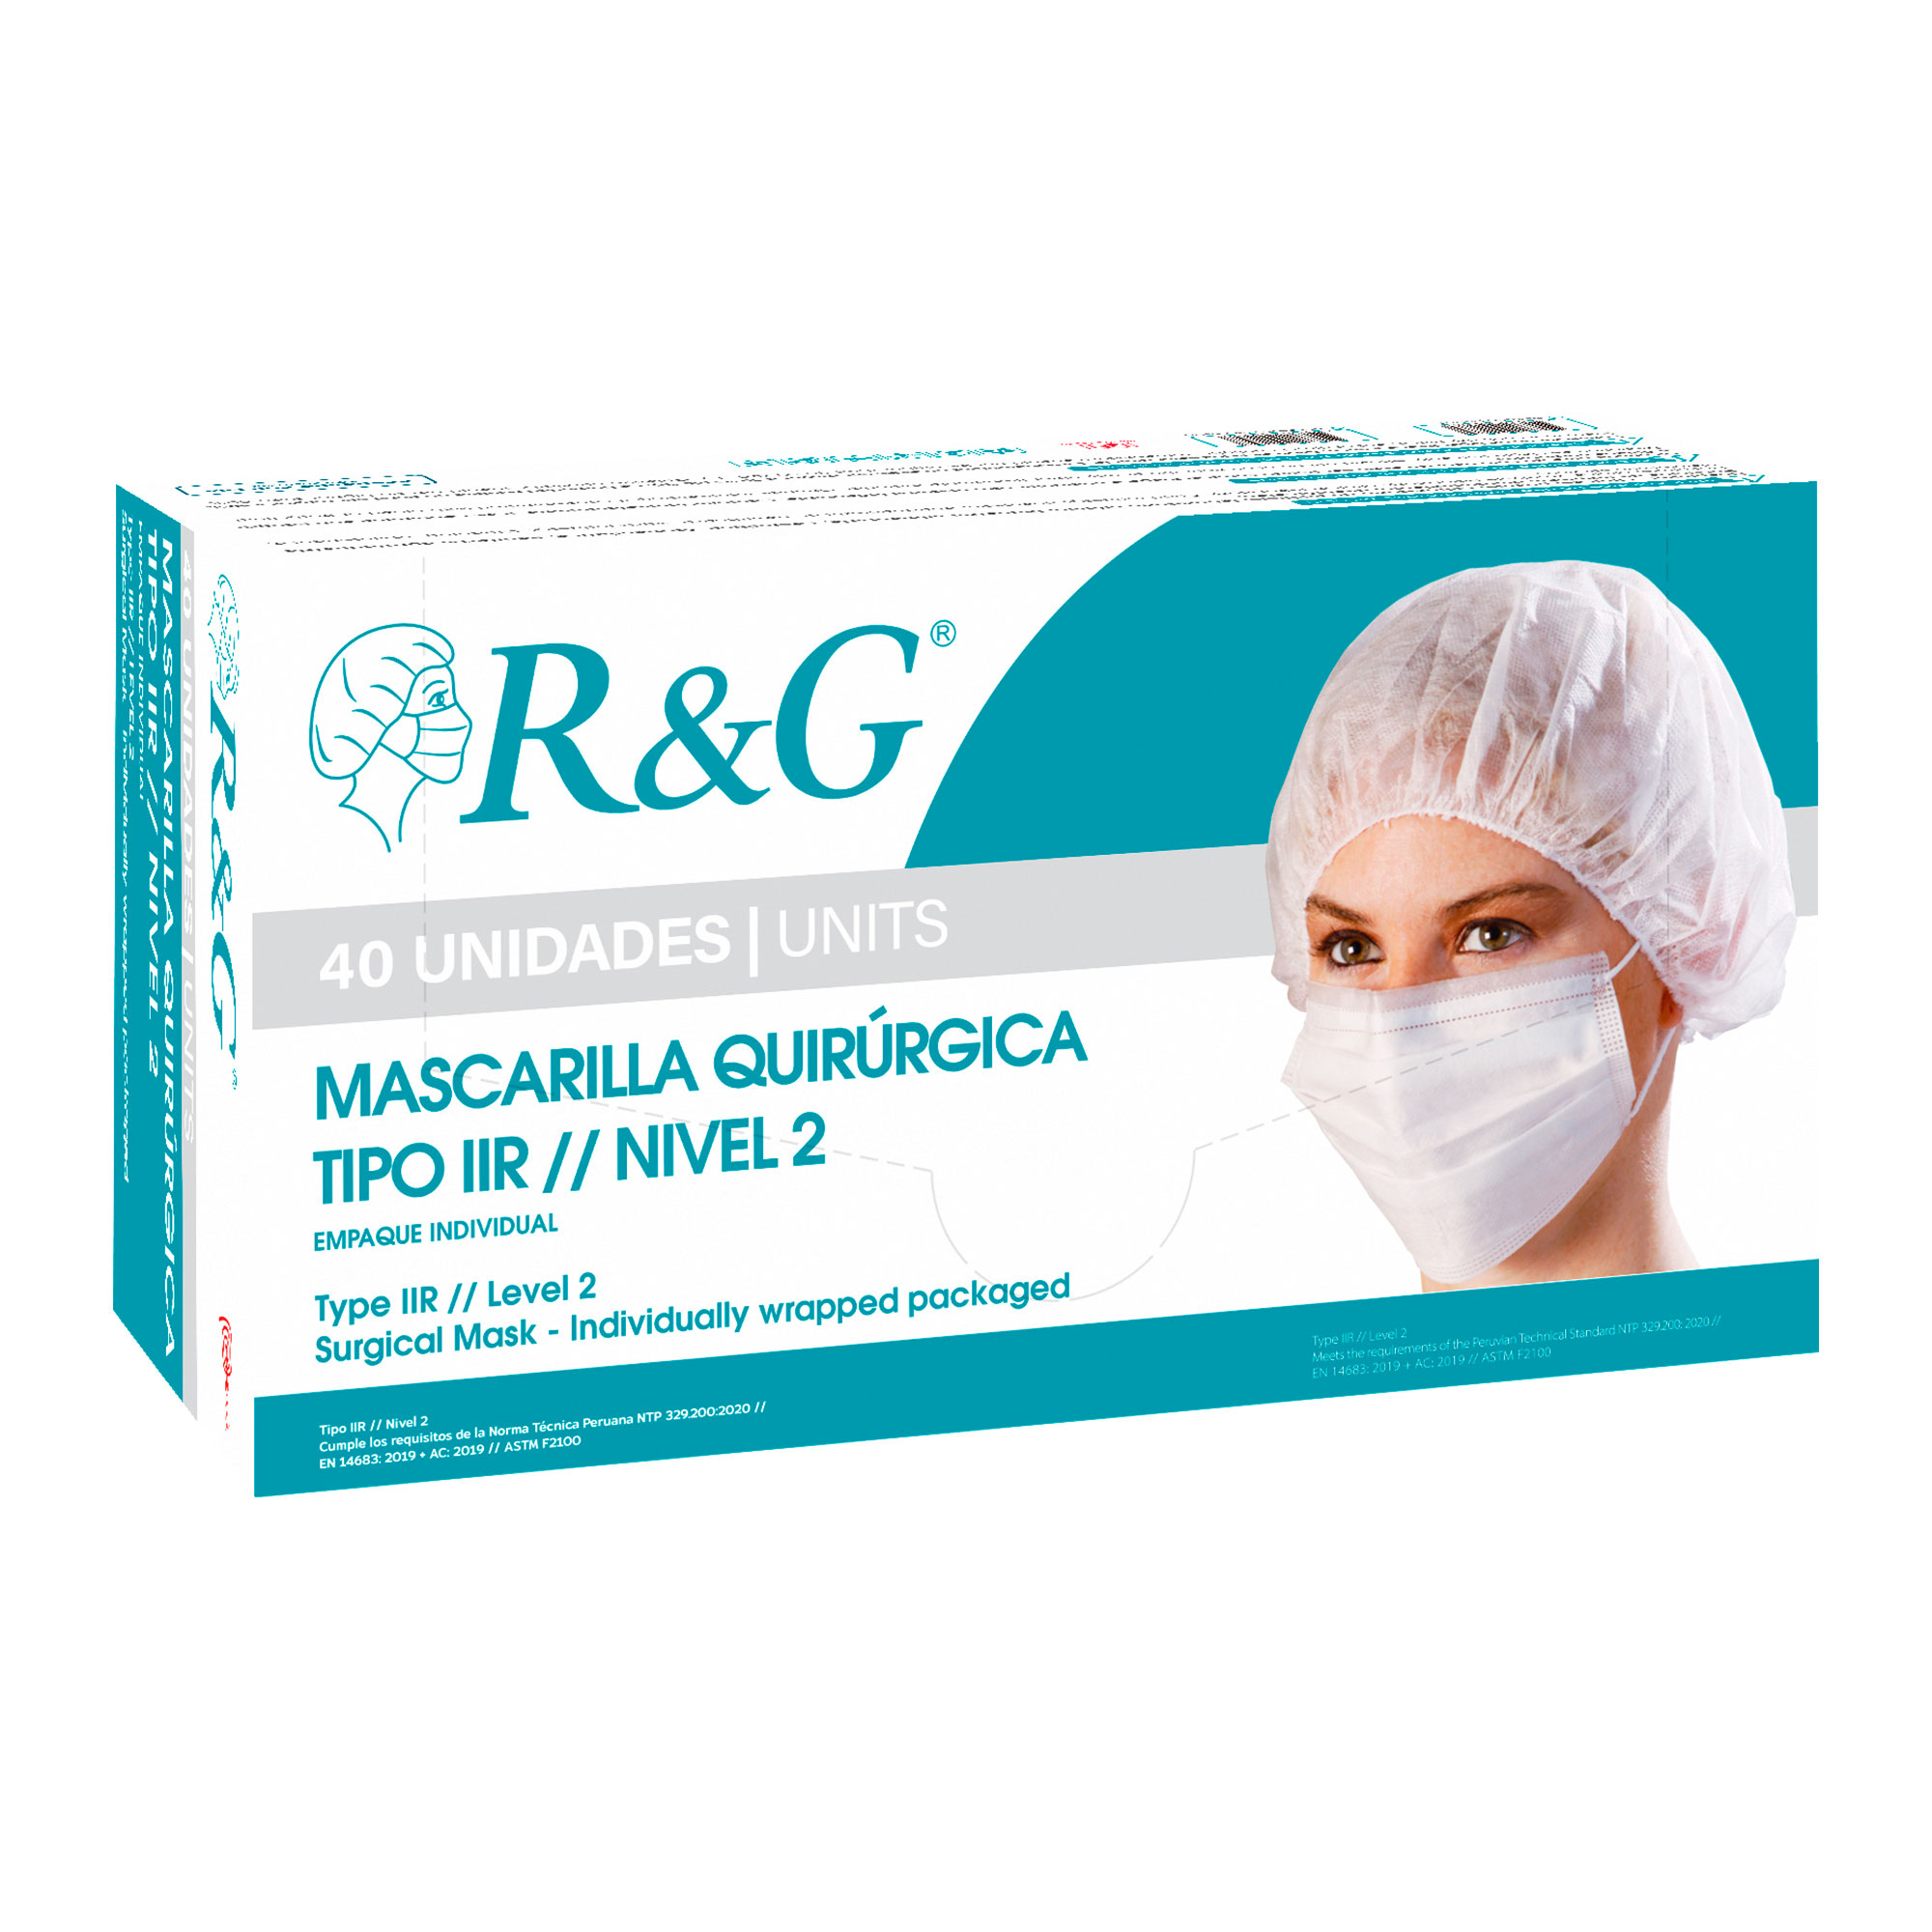 Mascarilla Quirúrgica Tipo IIR / Nivel 2 